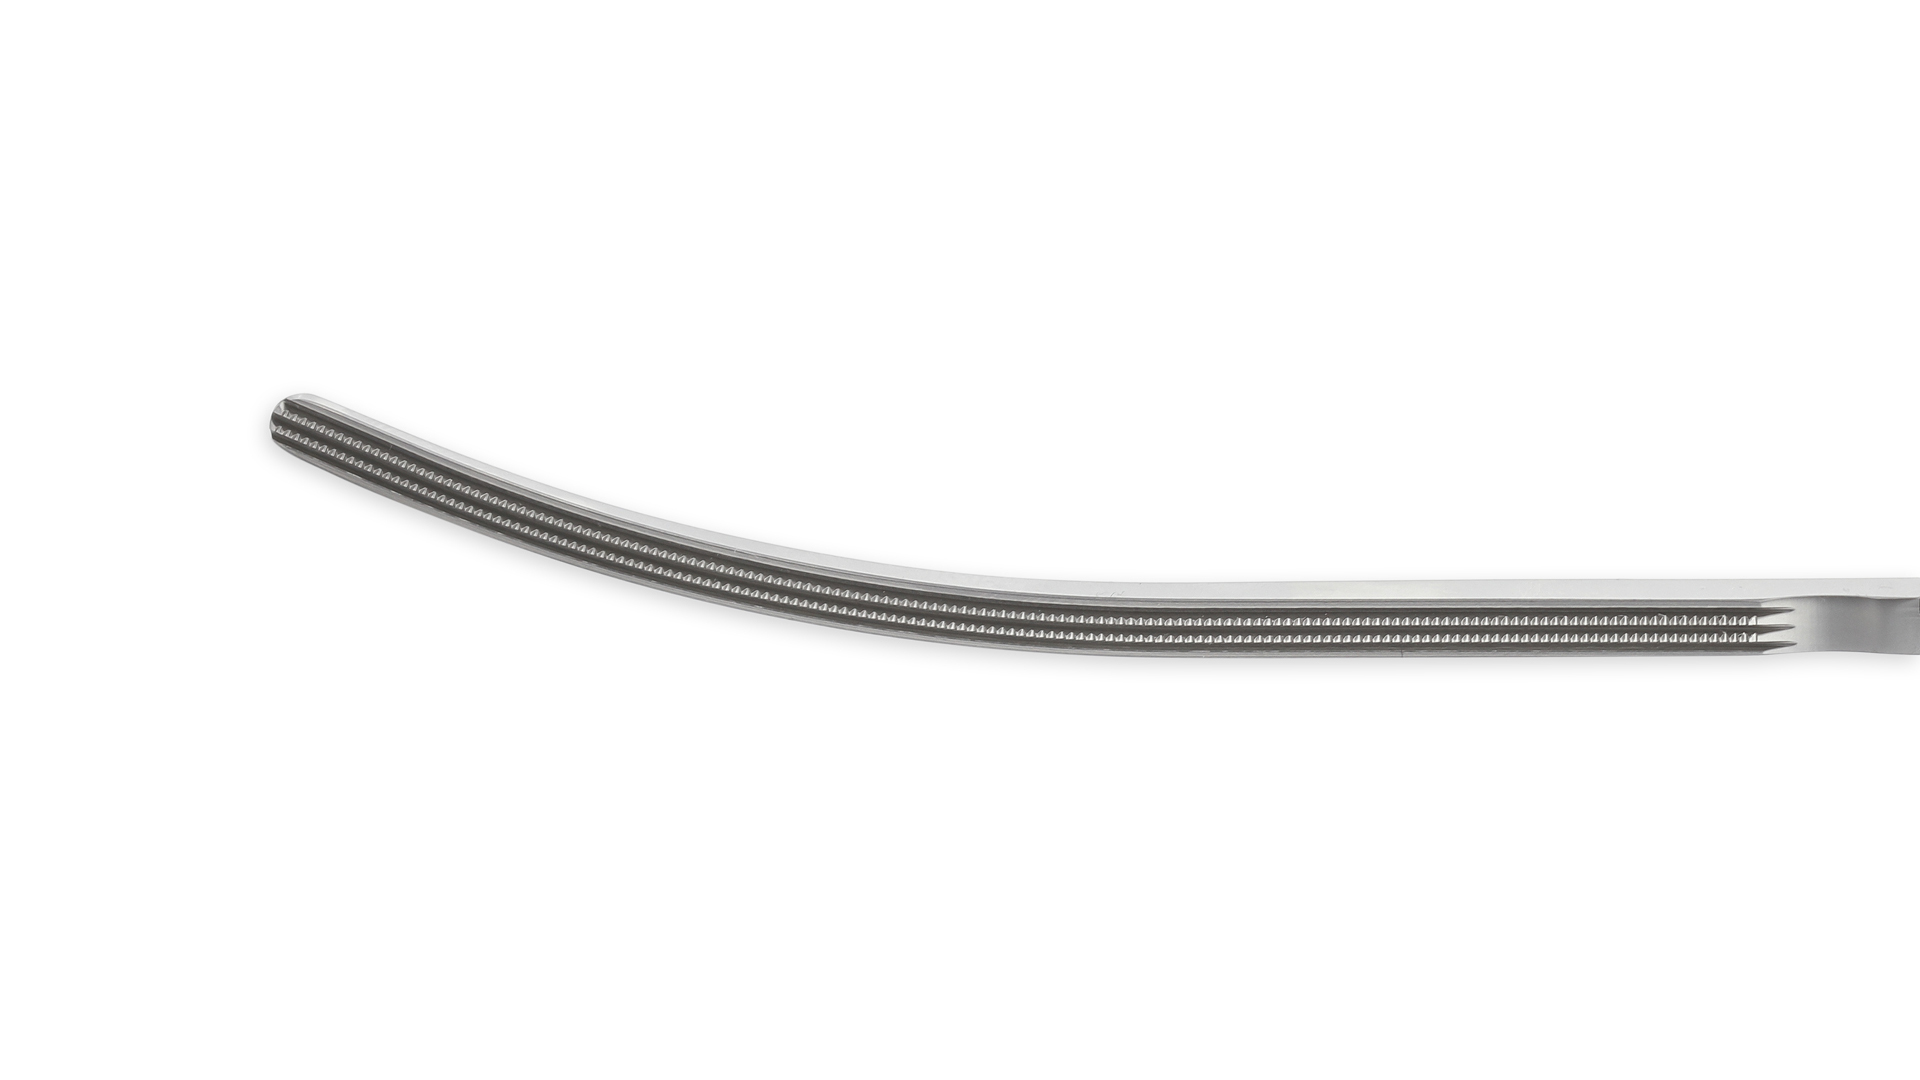 EPIC VATS DeBakey Clamp - 115 mm Curved 2x3 DeBakey Atraumatic jaws